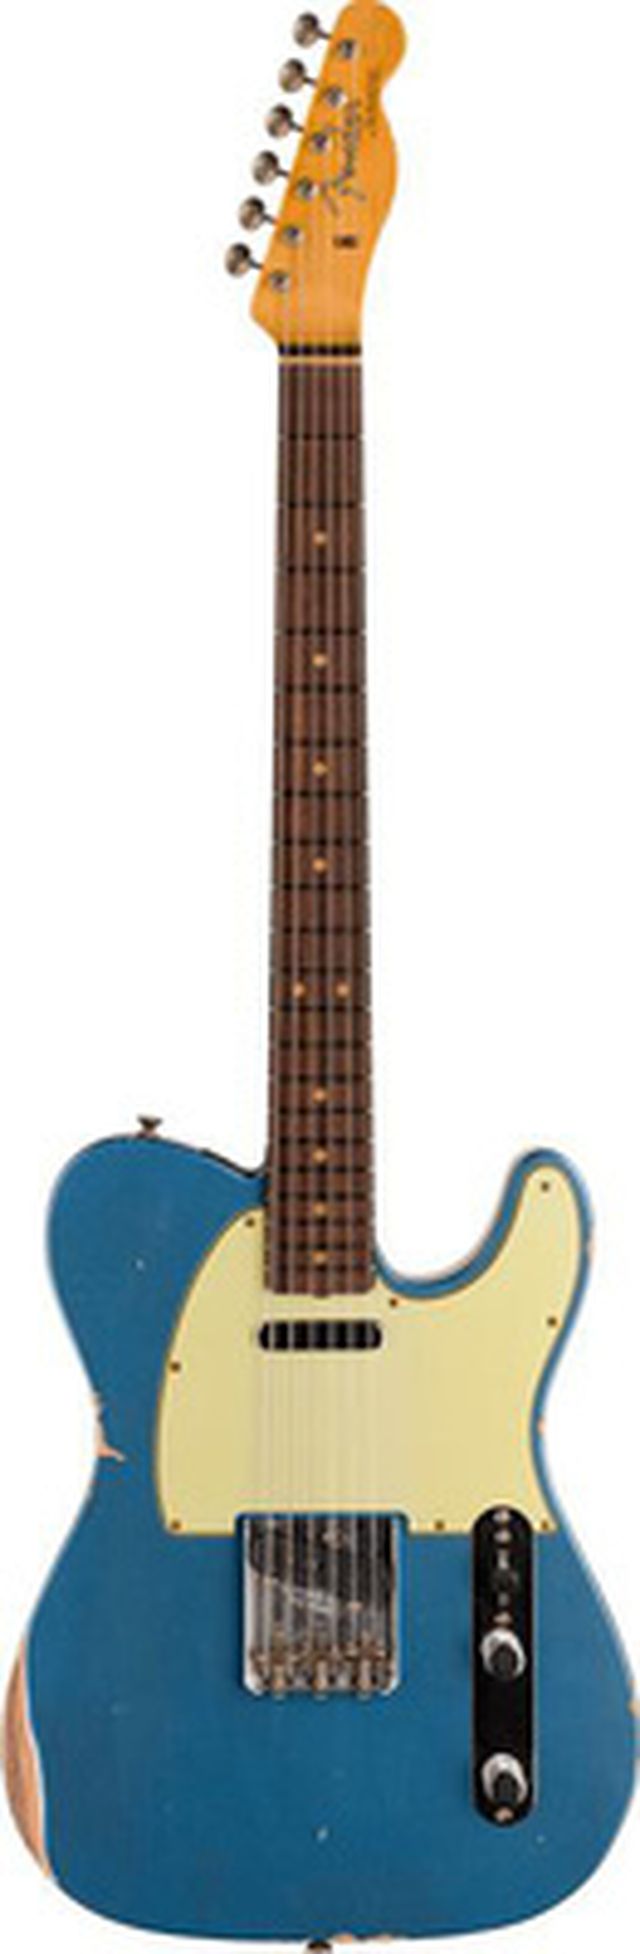 Fender 63 Tele RW LP Blue Aged